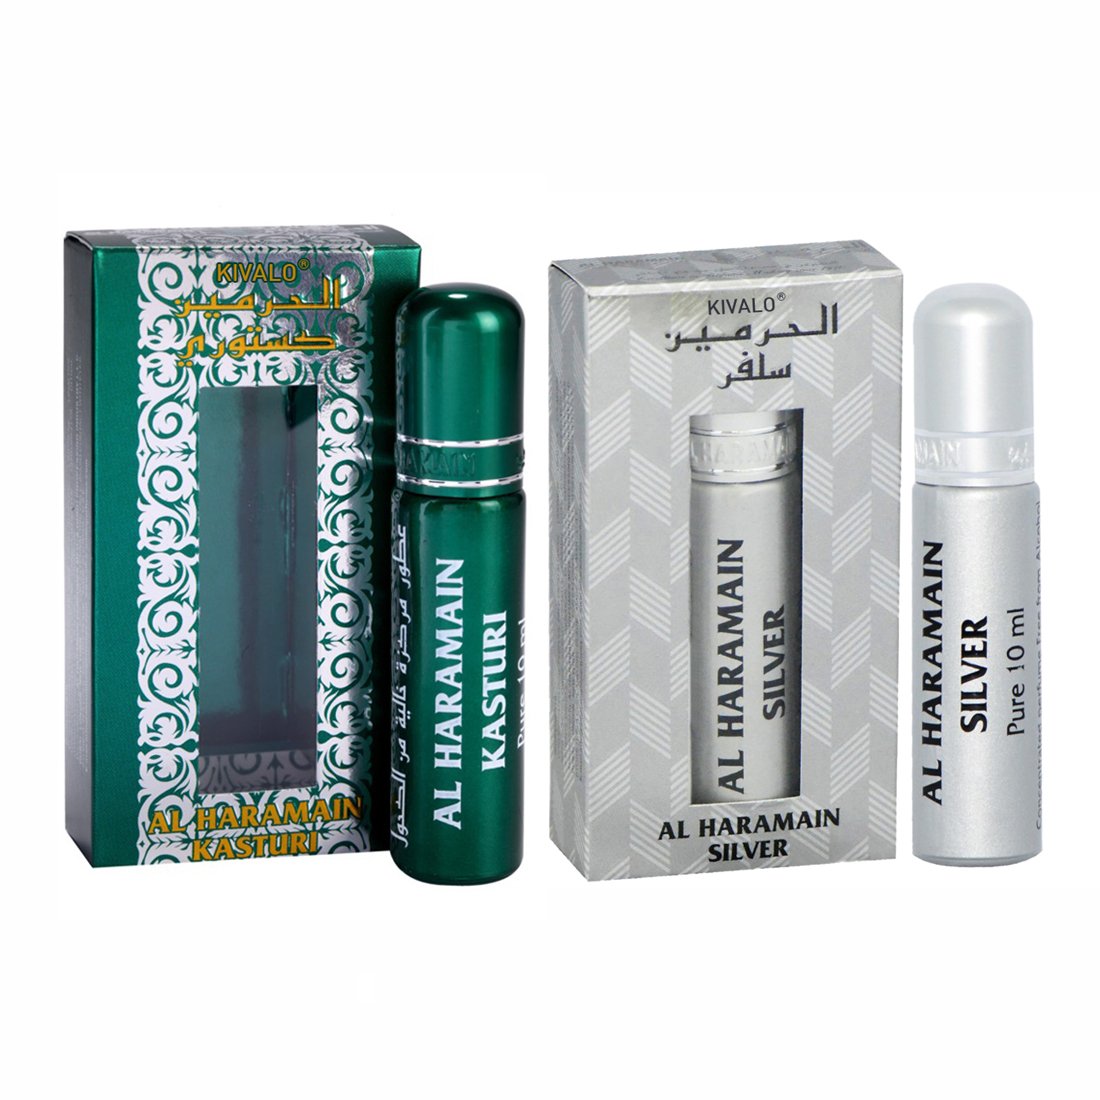 Al Haramain Kasturi & Silver Fragrance Pure Original Roll On Attar Combo Pack of 2 x 10 ml